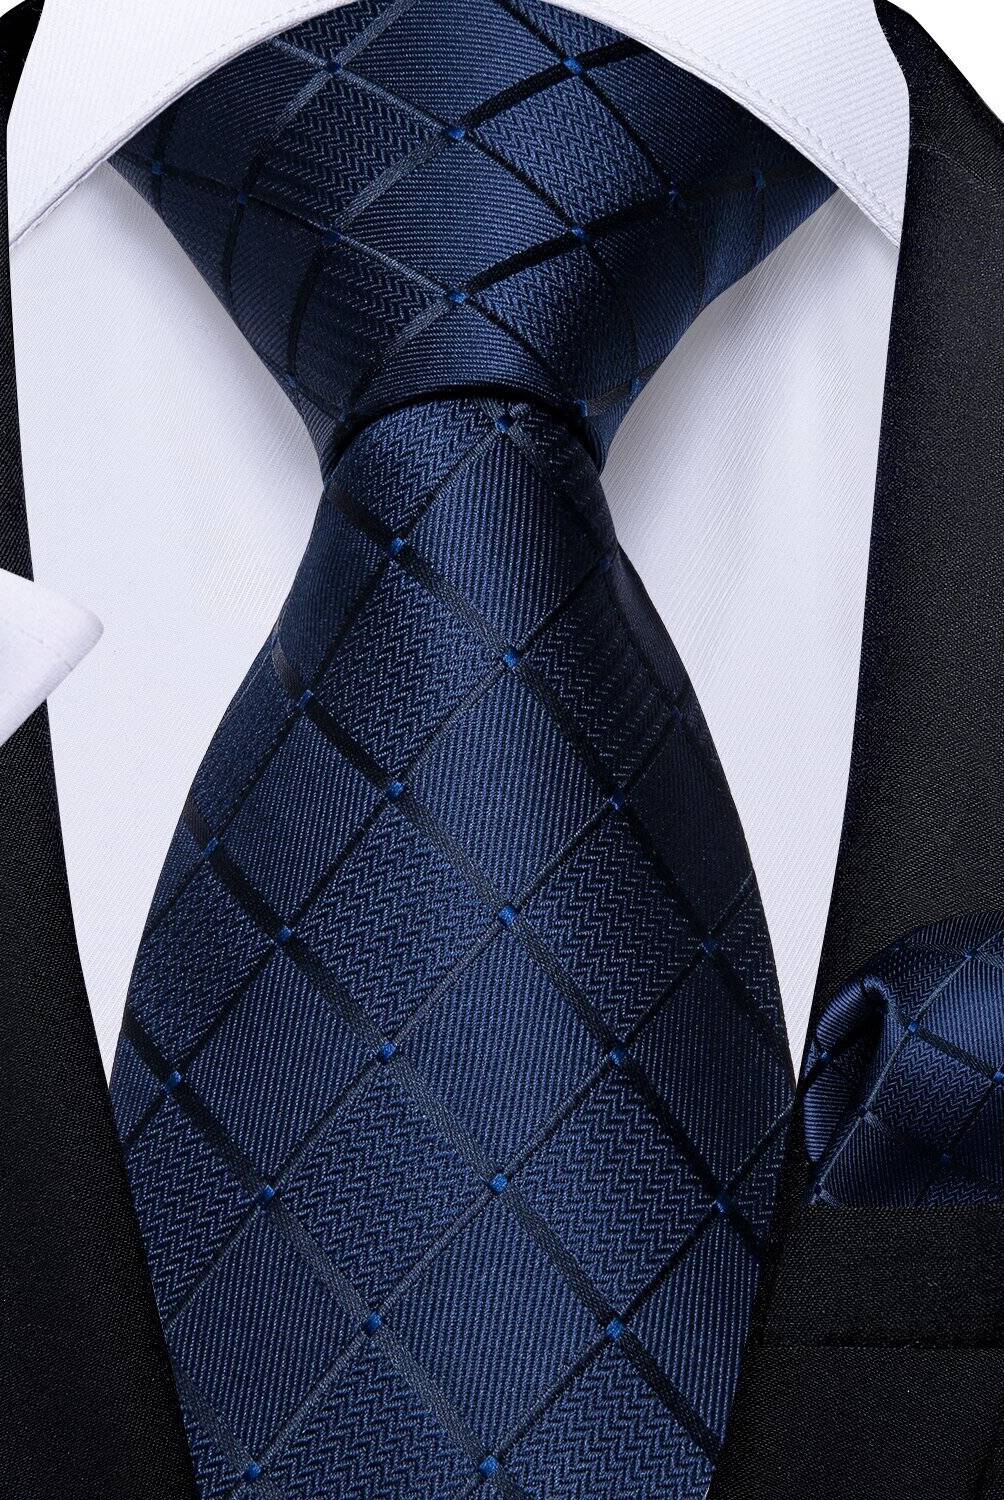 SONEC FASHION - Set Corbata Seda Hombre Paño Colleras. Sangre Azul